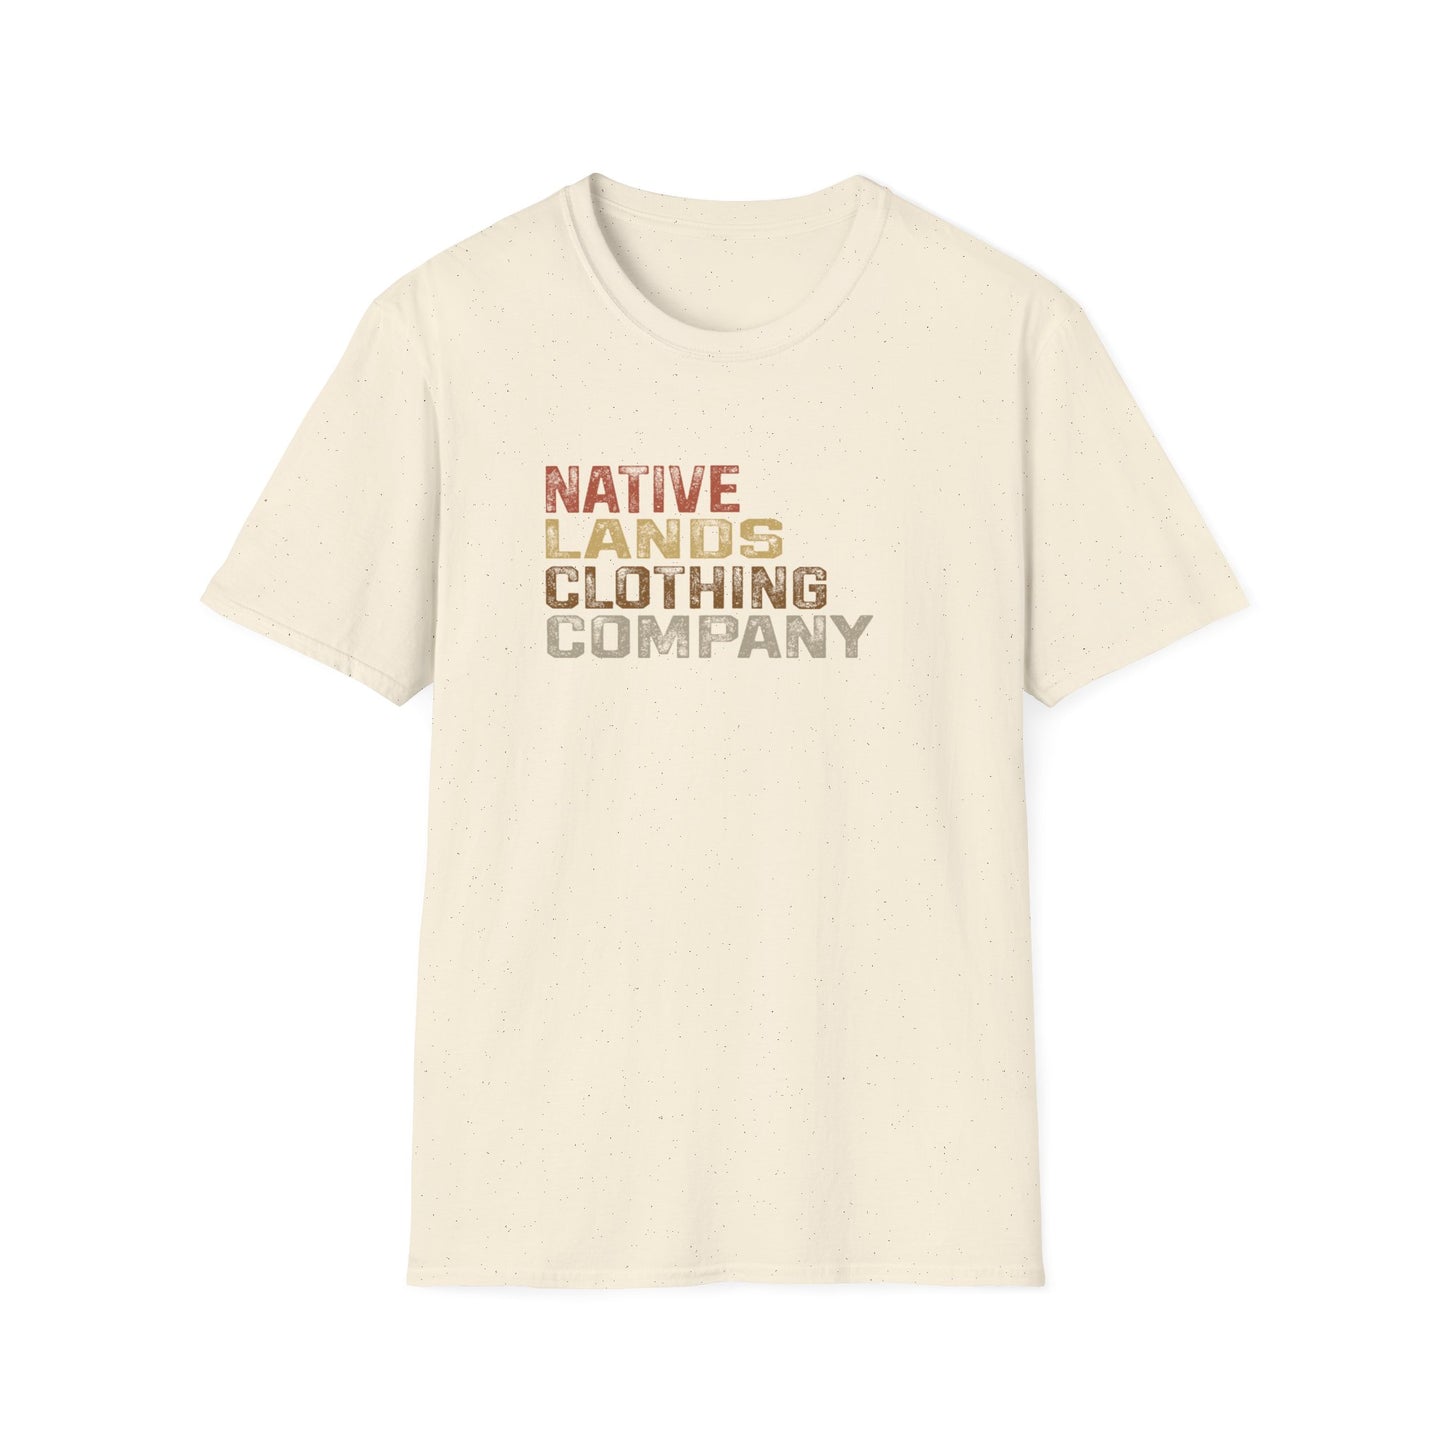 Native Lands Clothing Company Earth Shirt Cotton Native American